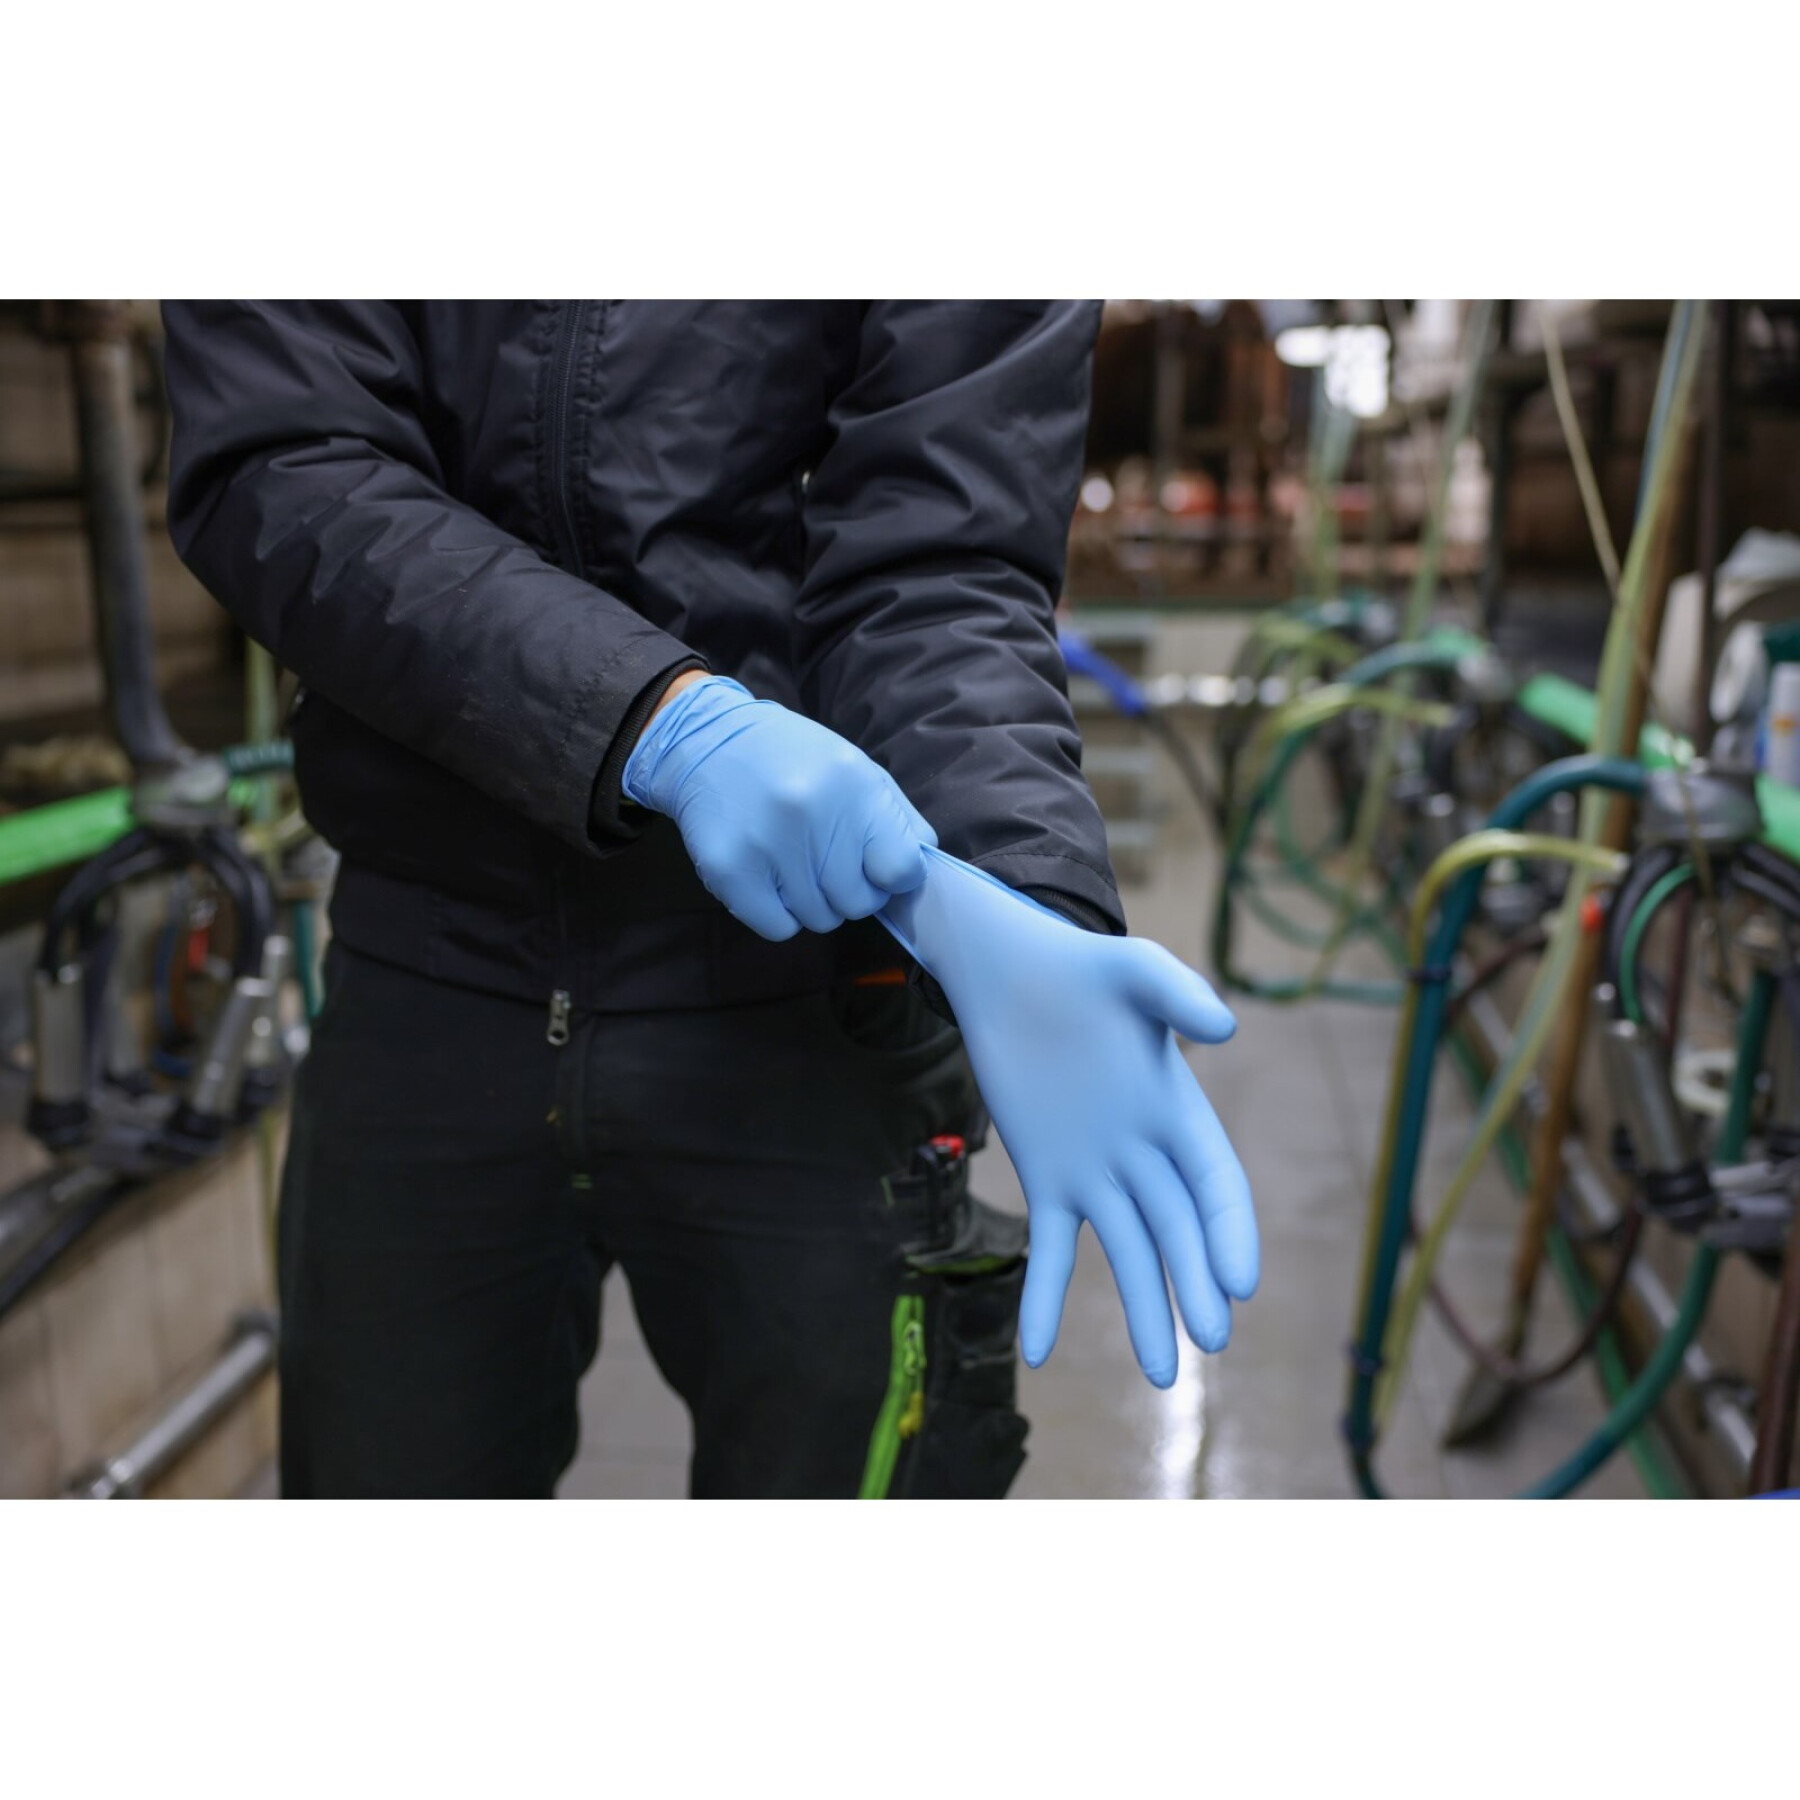 Single-use nitrile gloves Kerbl Top Pro (x90)